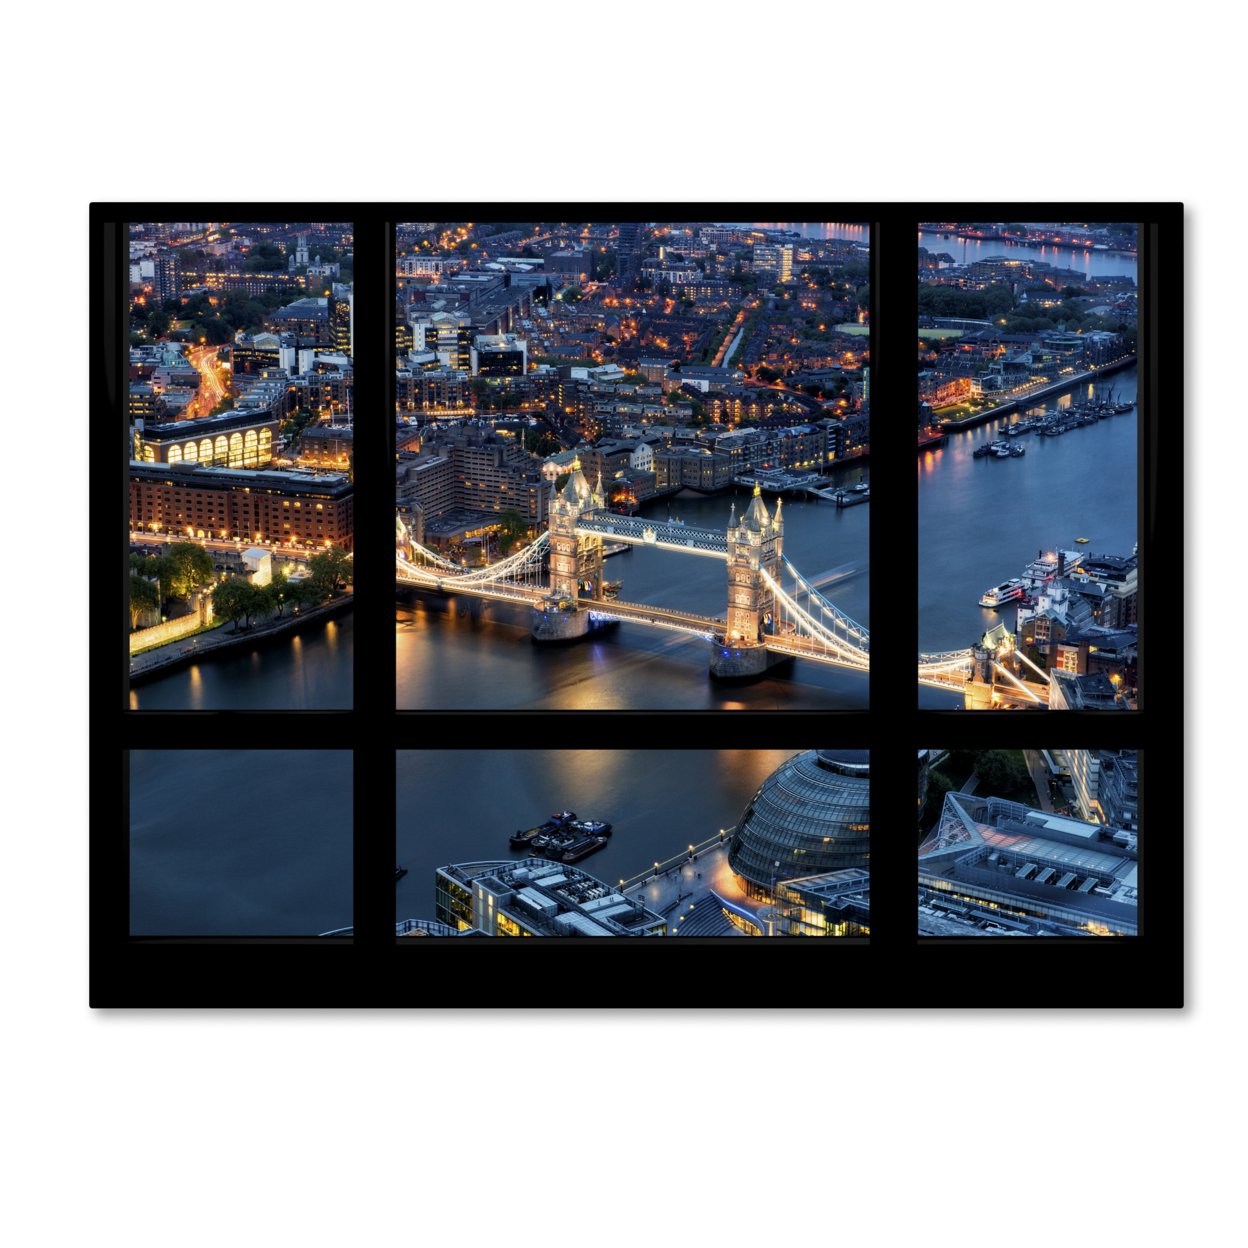 Philippe Hugonnard 'Window View London Bridge 2' Canvas Wall Art 35 X 47 Inches